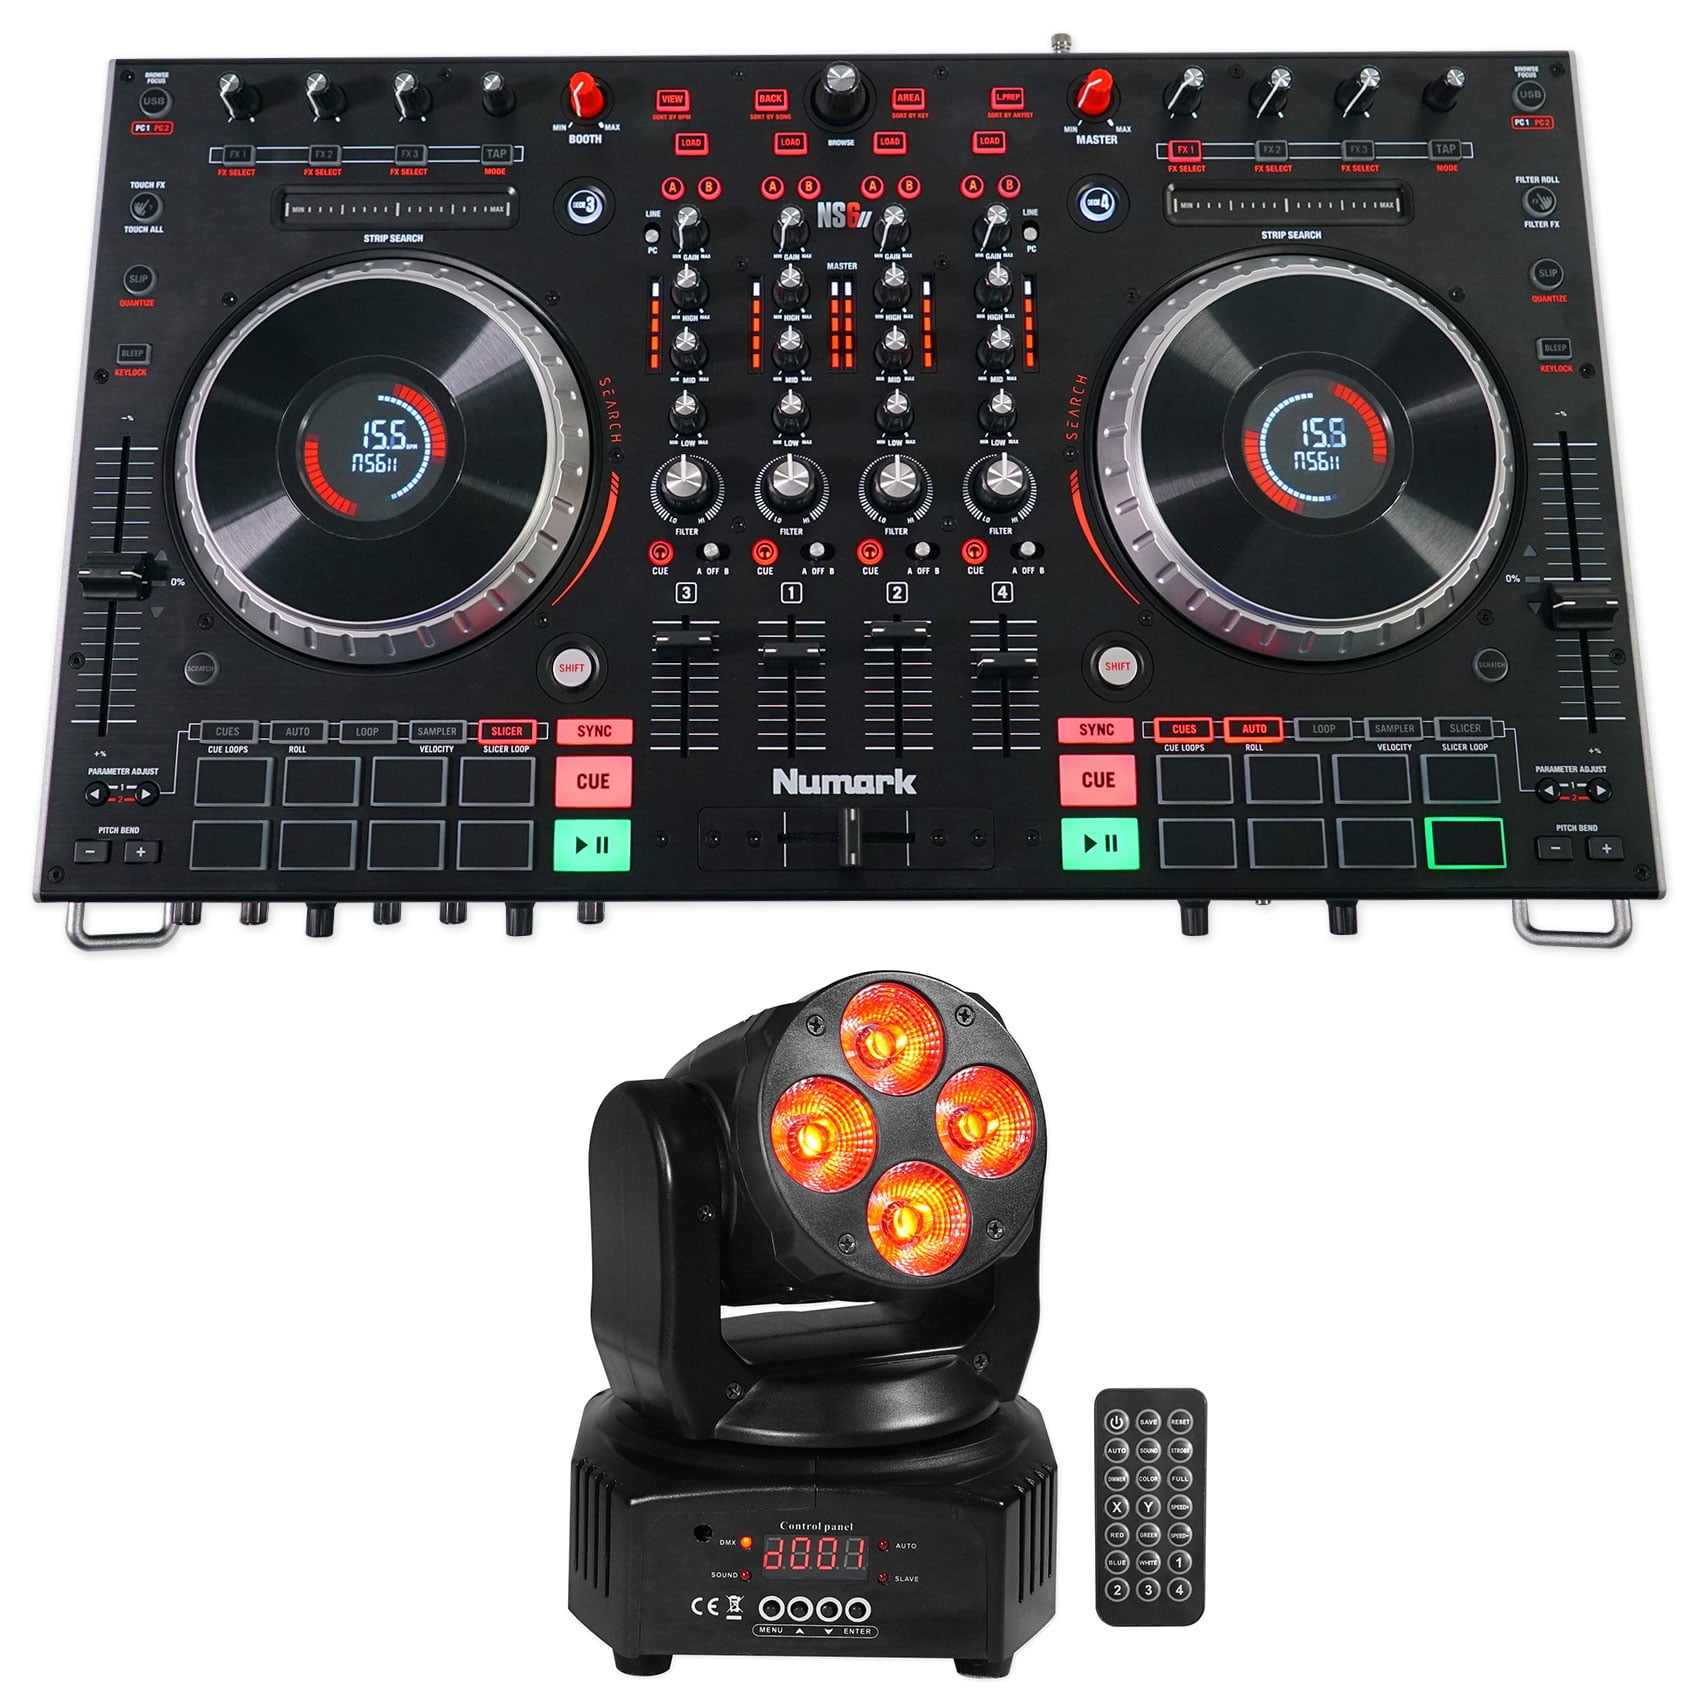 Numark NS6II 4-Channel DJ Controller w/ Color LCD Display+Serato DJ+Moving  Head